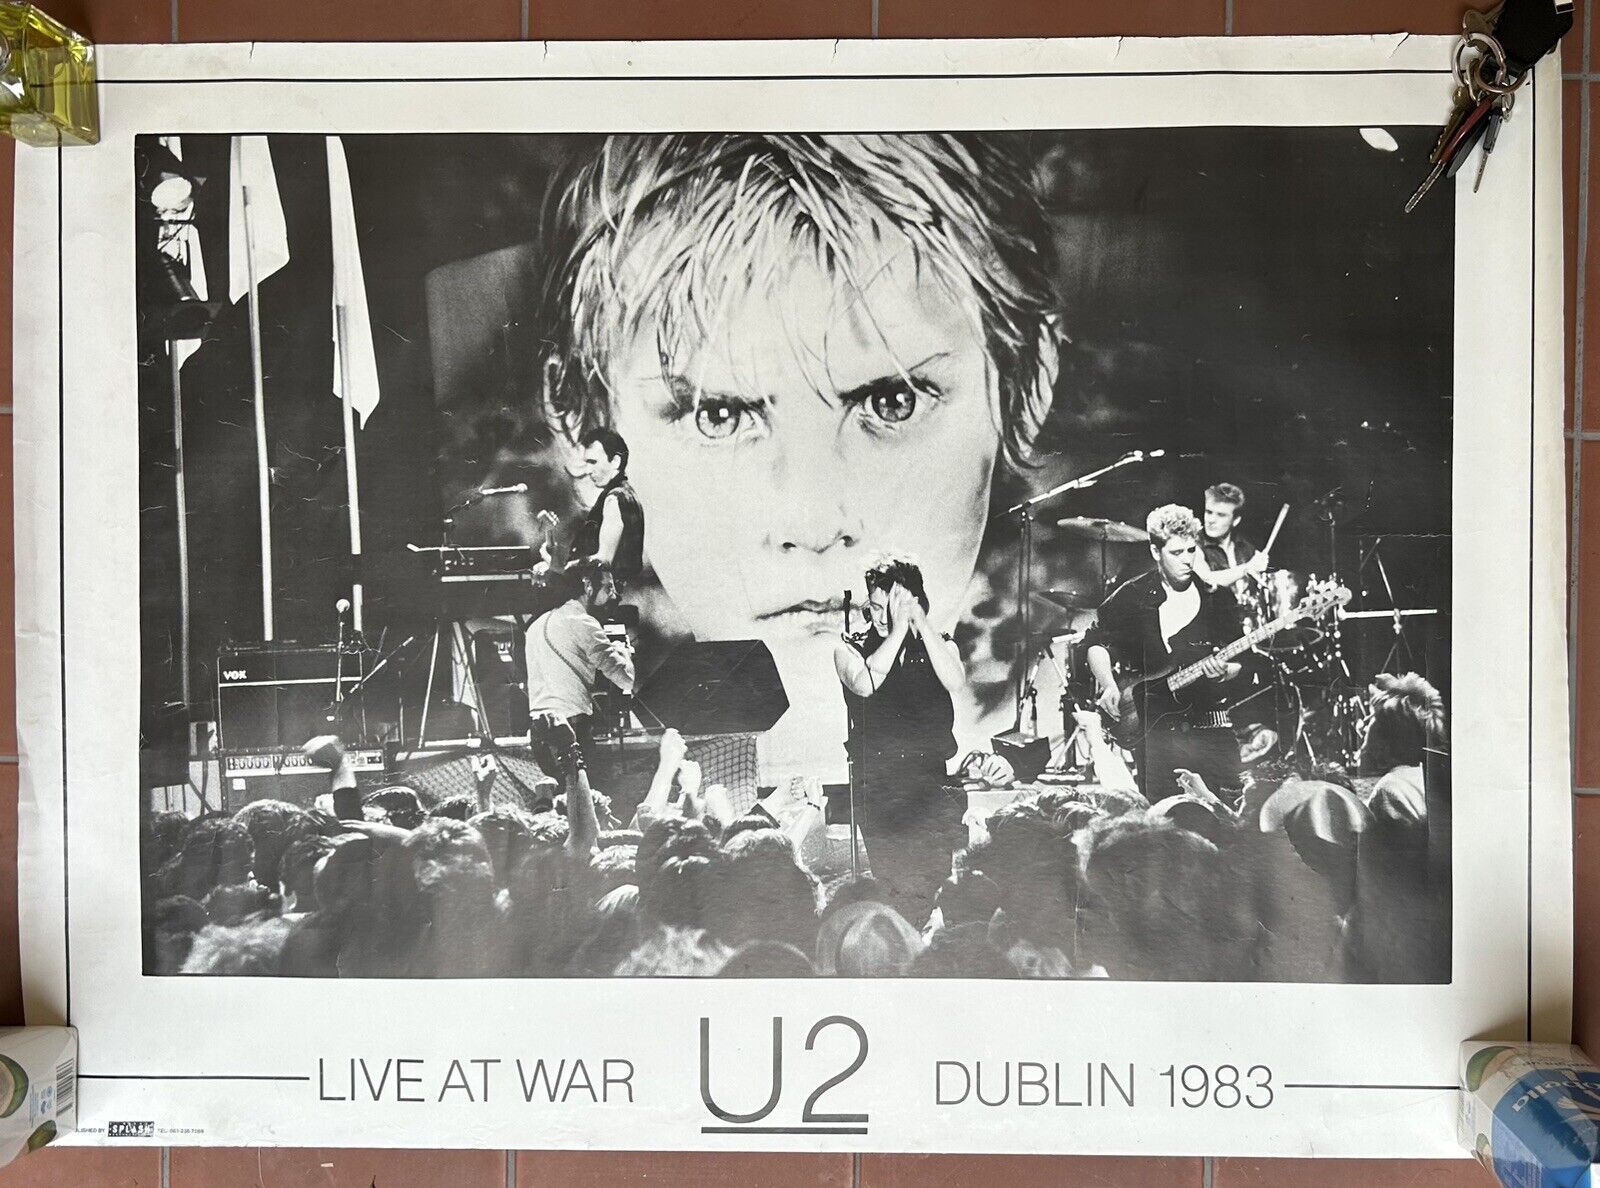 U2 “Live At War Dublin 1983” Poster Vintage Rare Collectible 